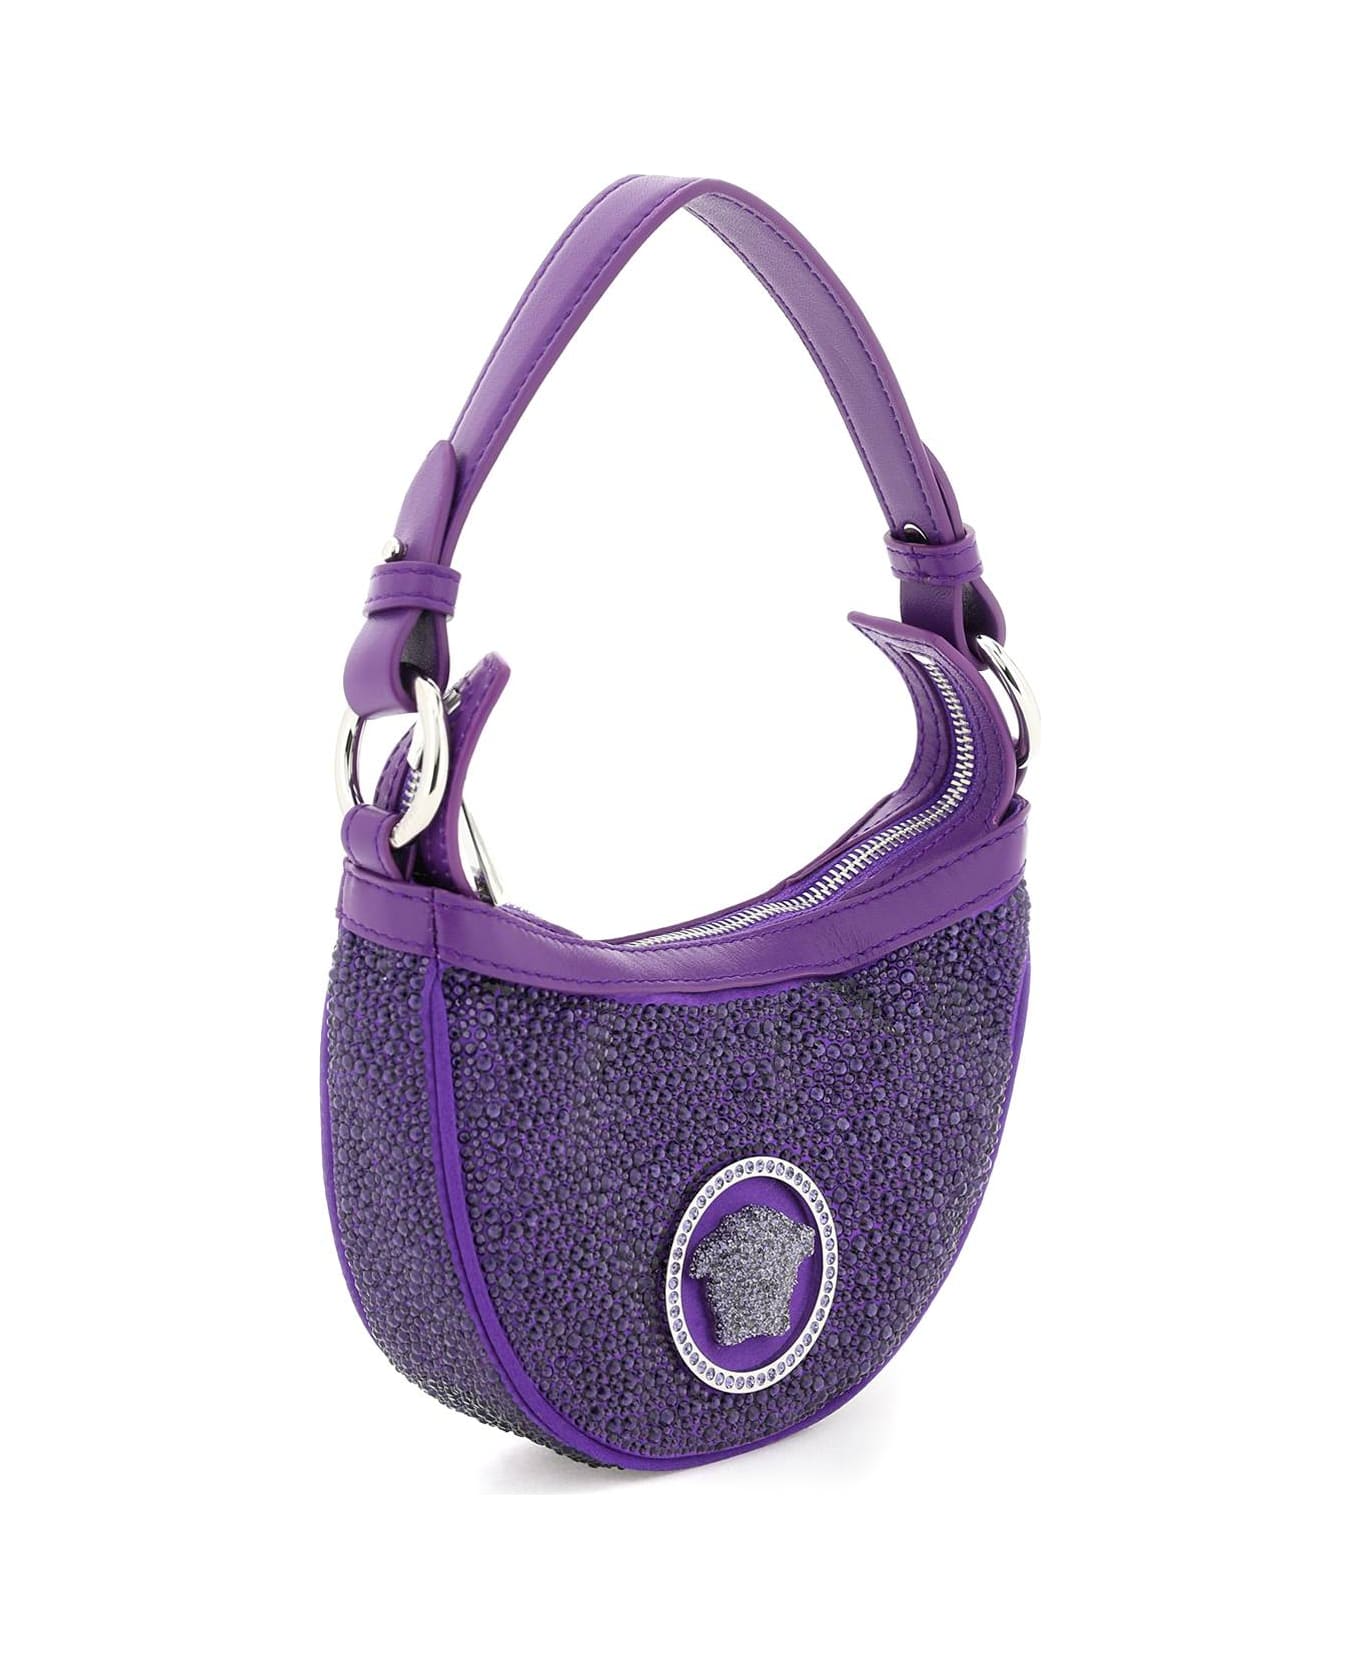 Versace Mini Hobo Bag With Crystals - DARK ORCHID PALLADIUM (Purple) トートバッグ